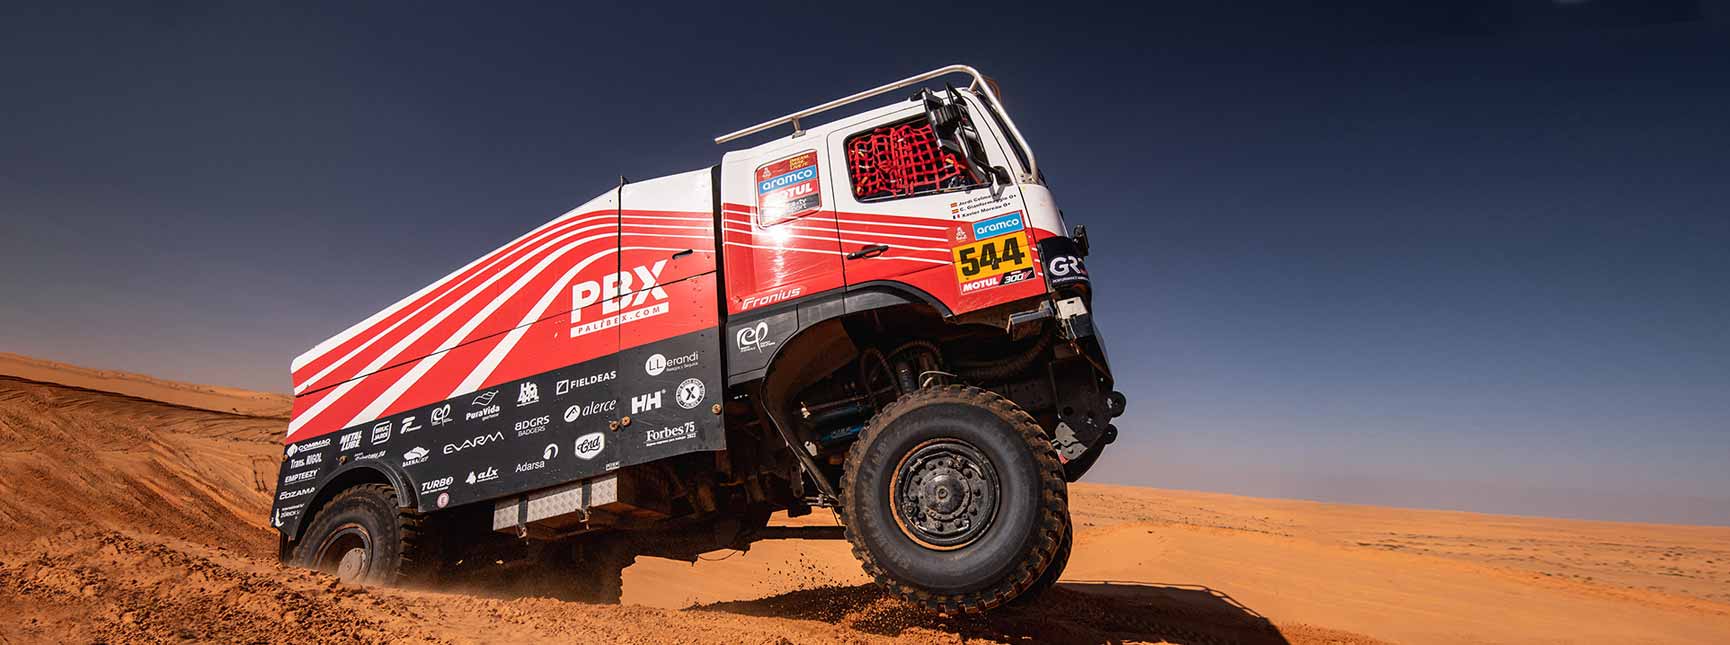 Navegacion en el dakar - camion dakar - camion dunas desierto - pbx dakar team - palibex